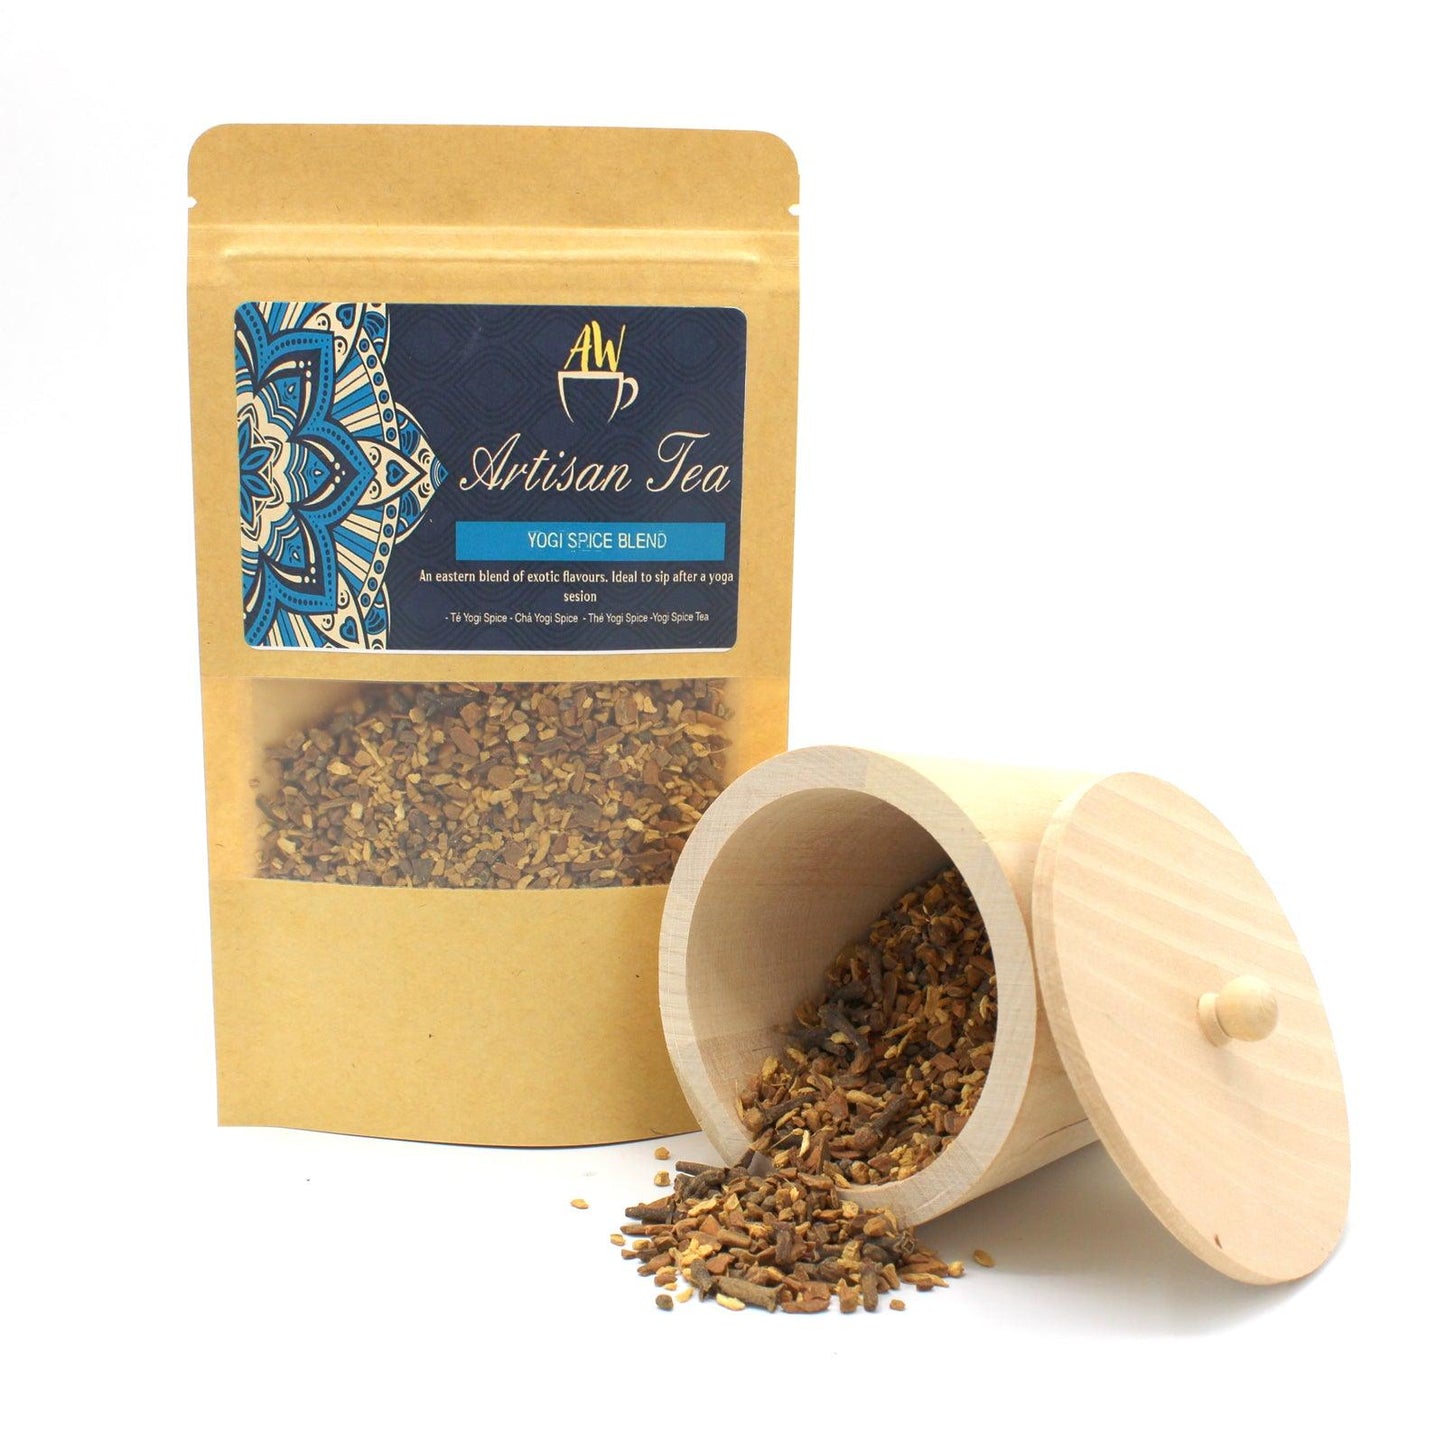 50g Yogi Spice Blend Artisan Tea - DuvetDay.co.uk